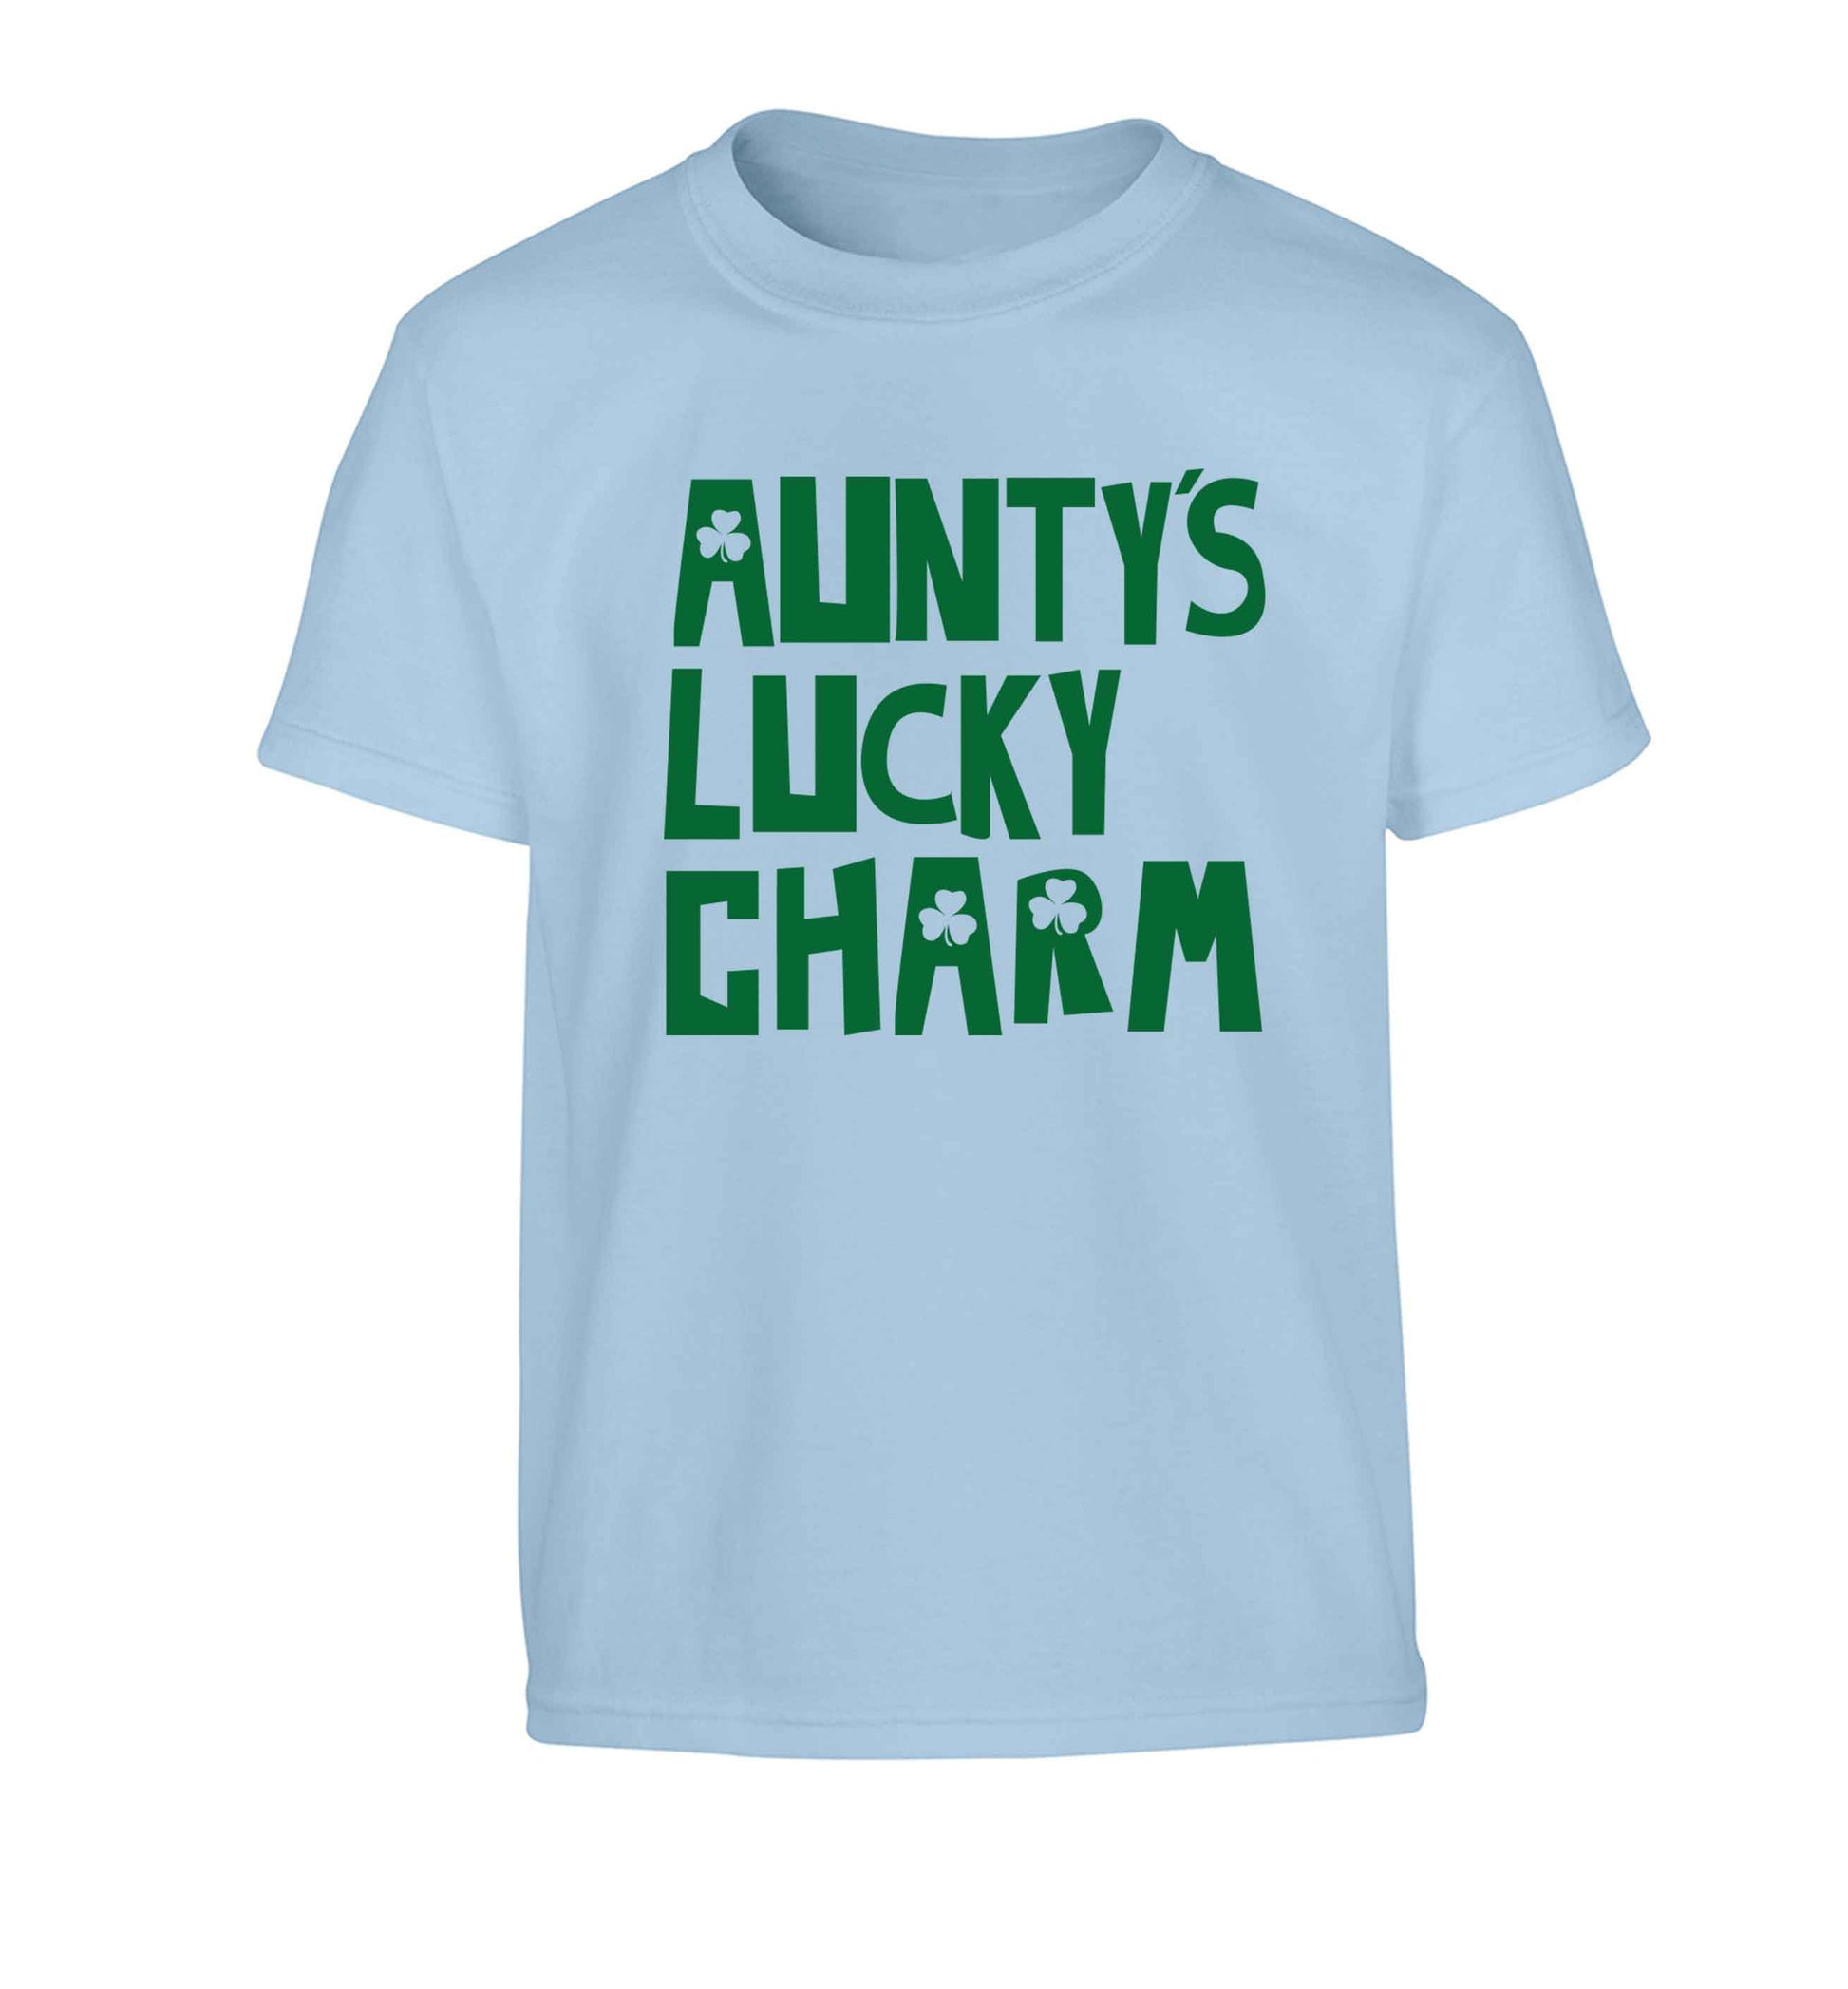 Aunty's lucky charm Children's light blue Tshirt 12-13 Years